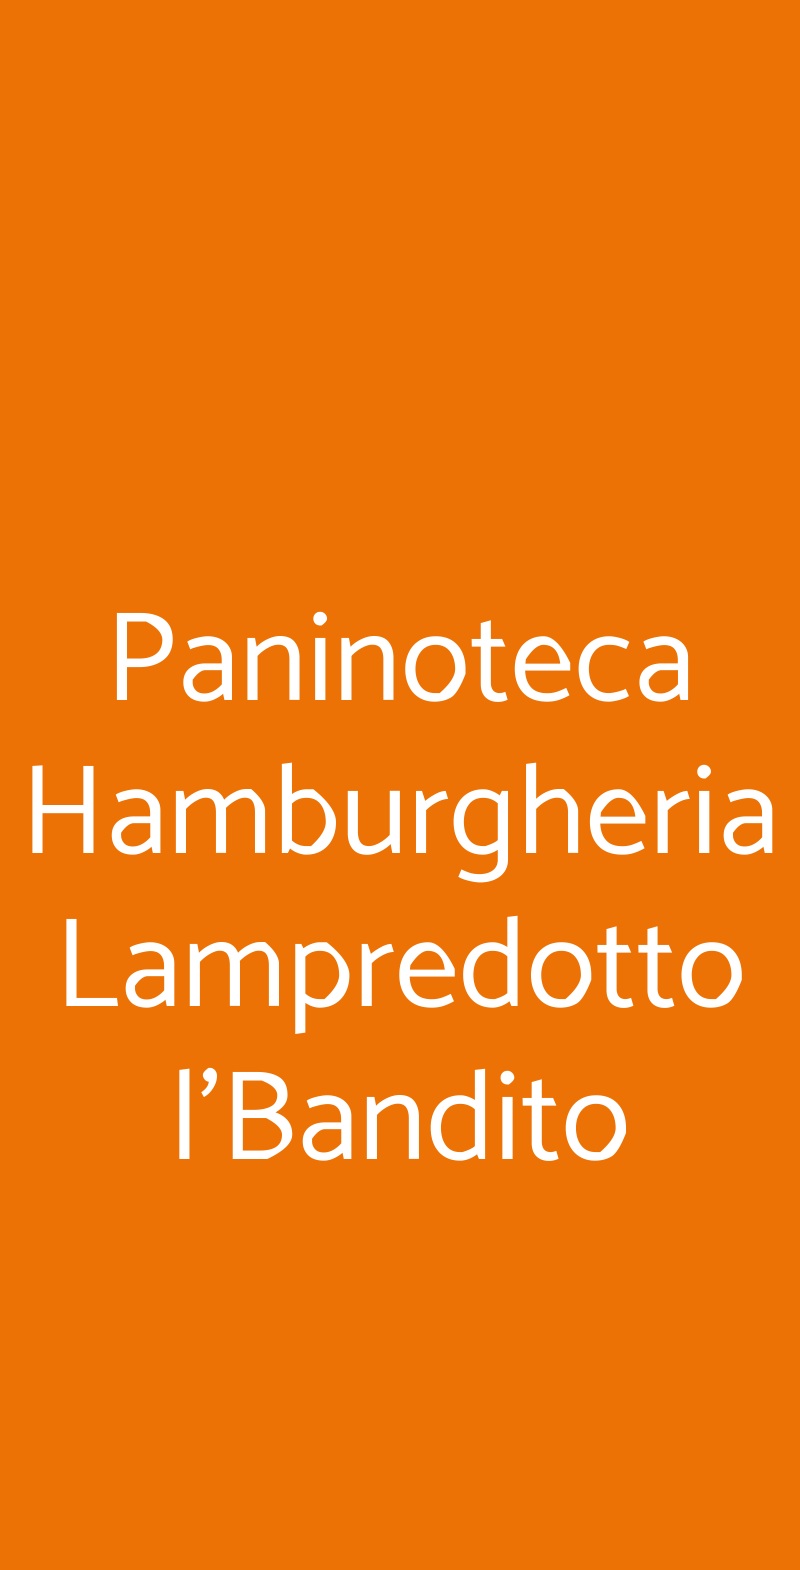 Paninoteca Hamburgheria Lampredotto l'Bandito Firenze menù 1 pagina